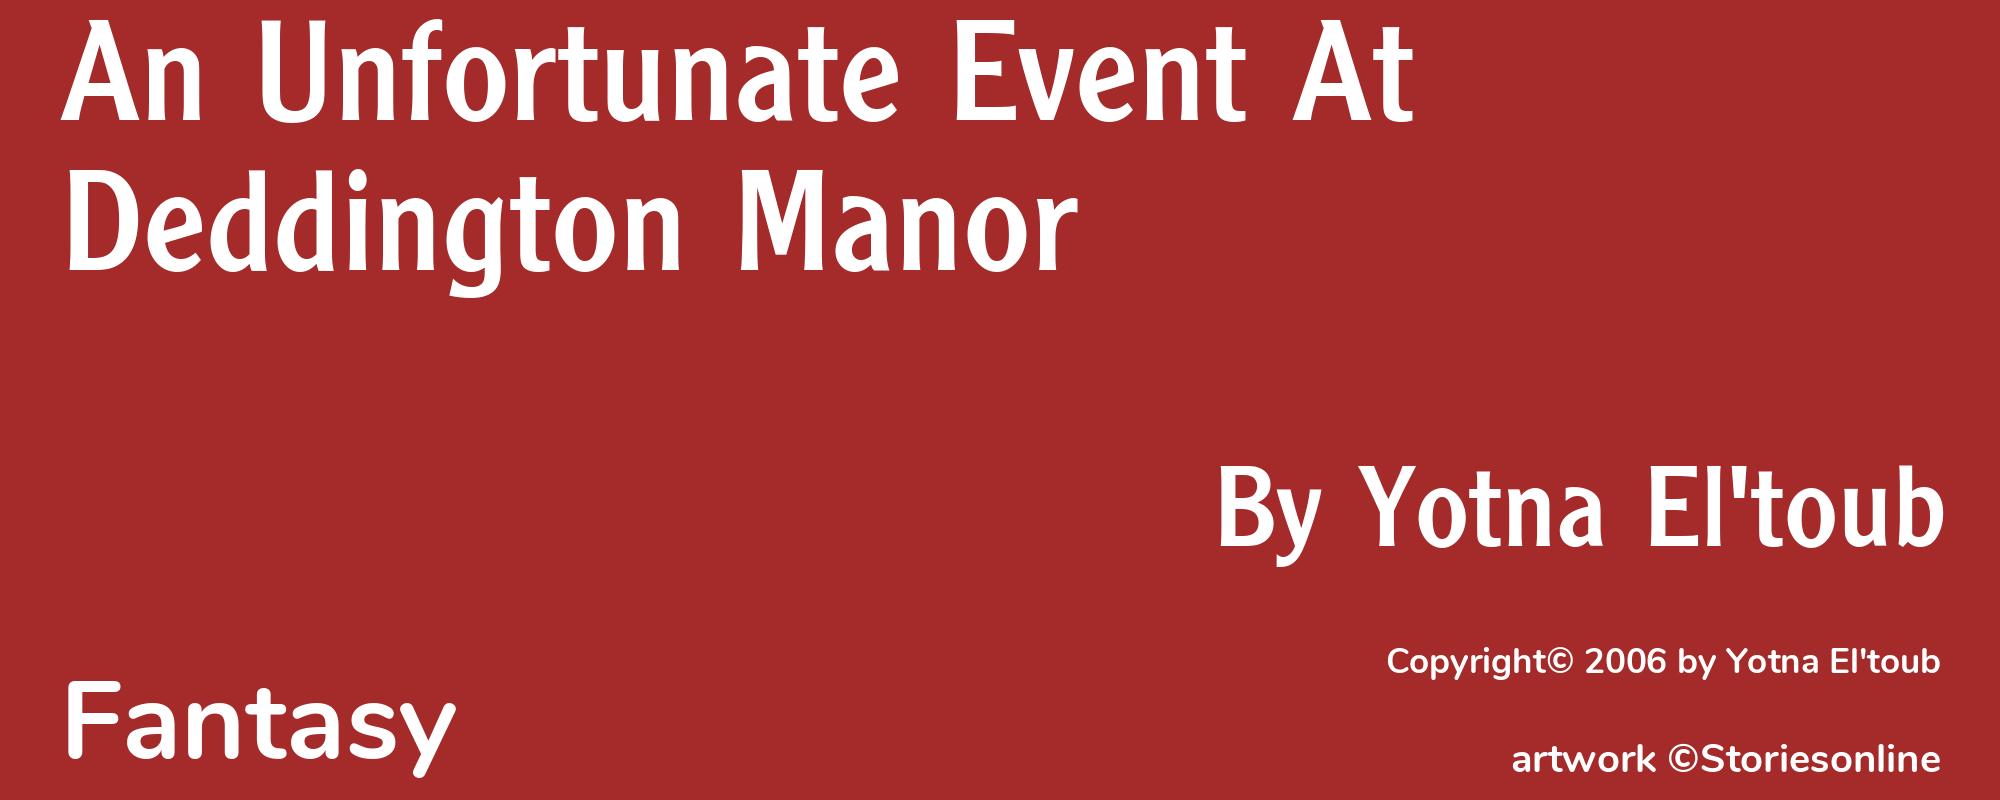 An Unfortunate Event At Deddington Manor - Cover